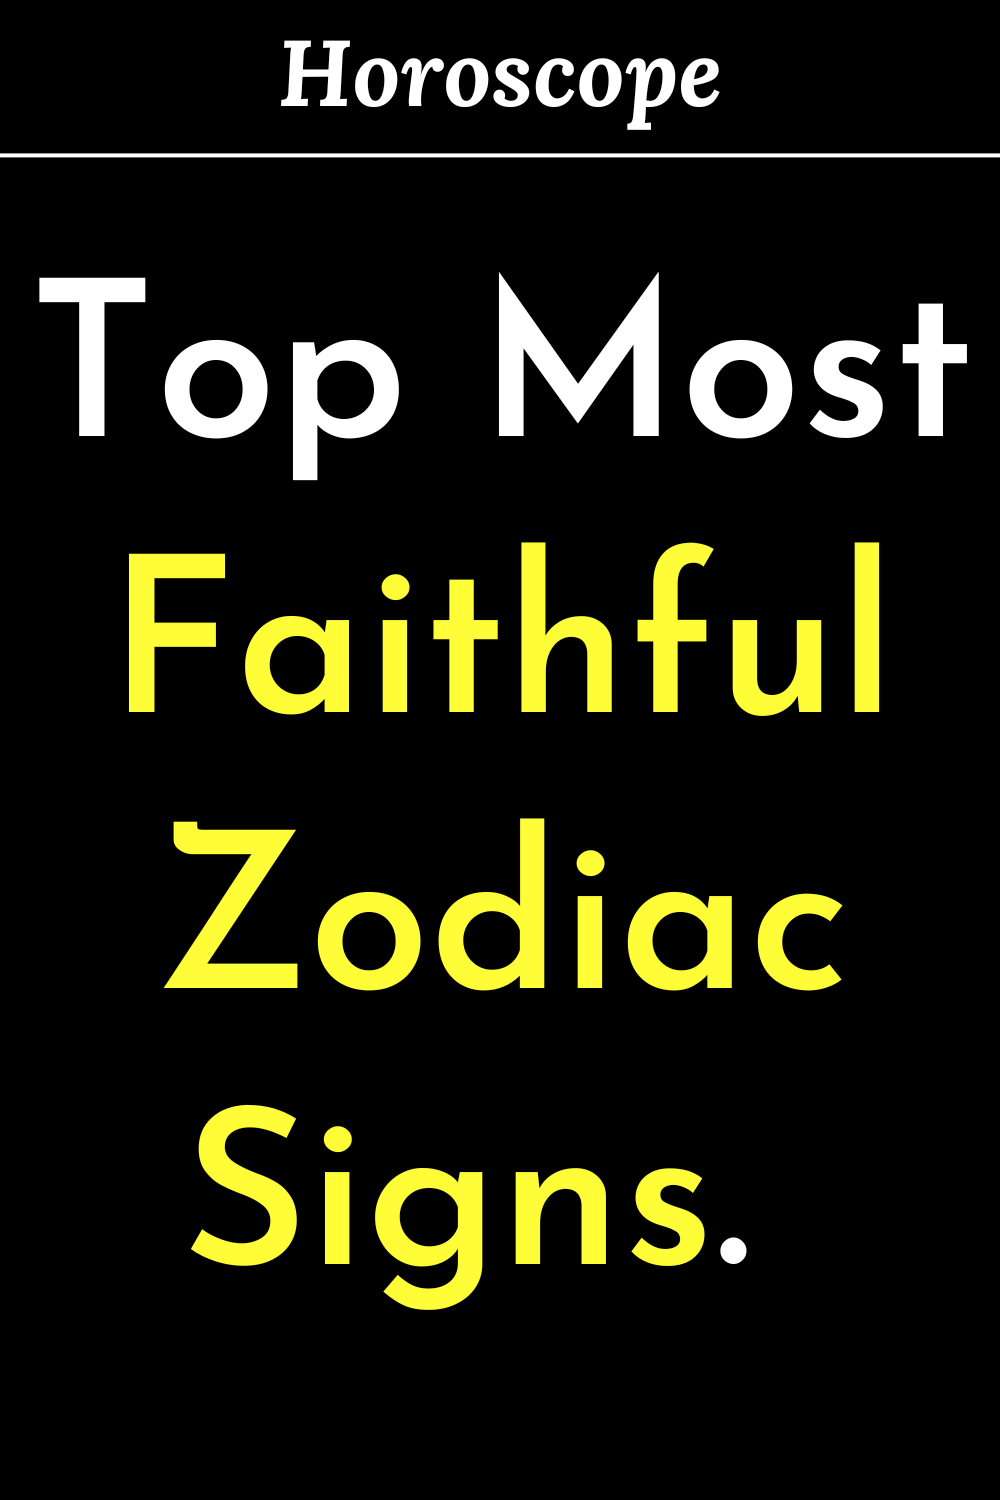 Top Most Faithful Zodiac Signs.